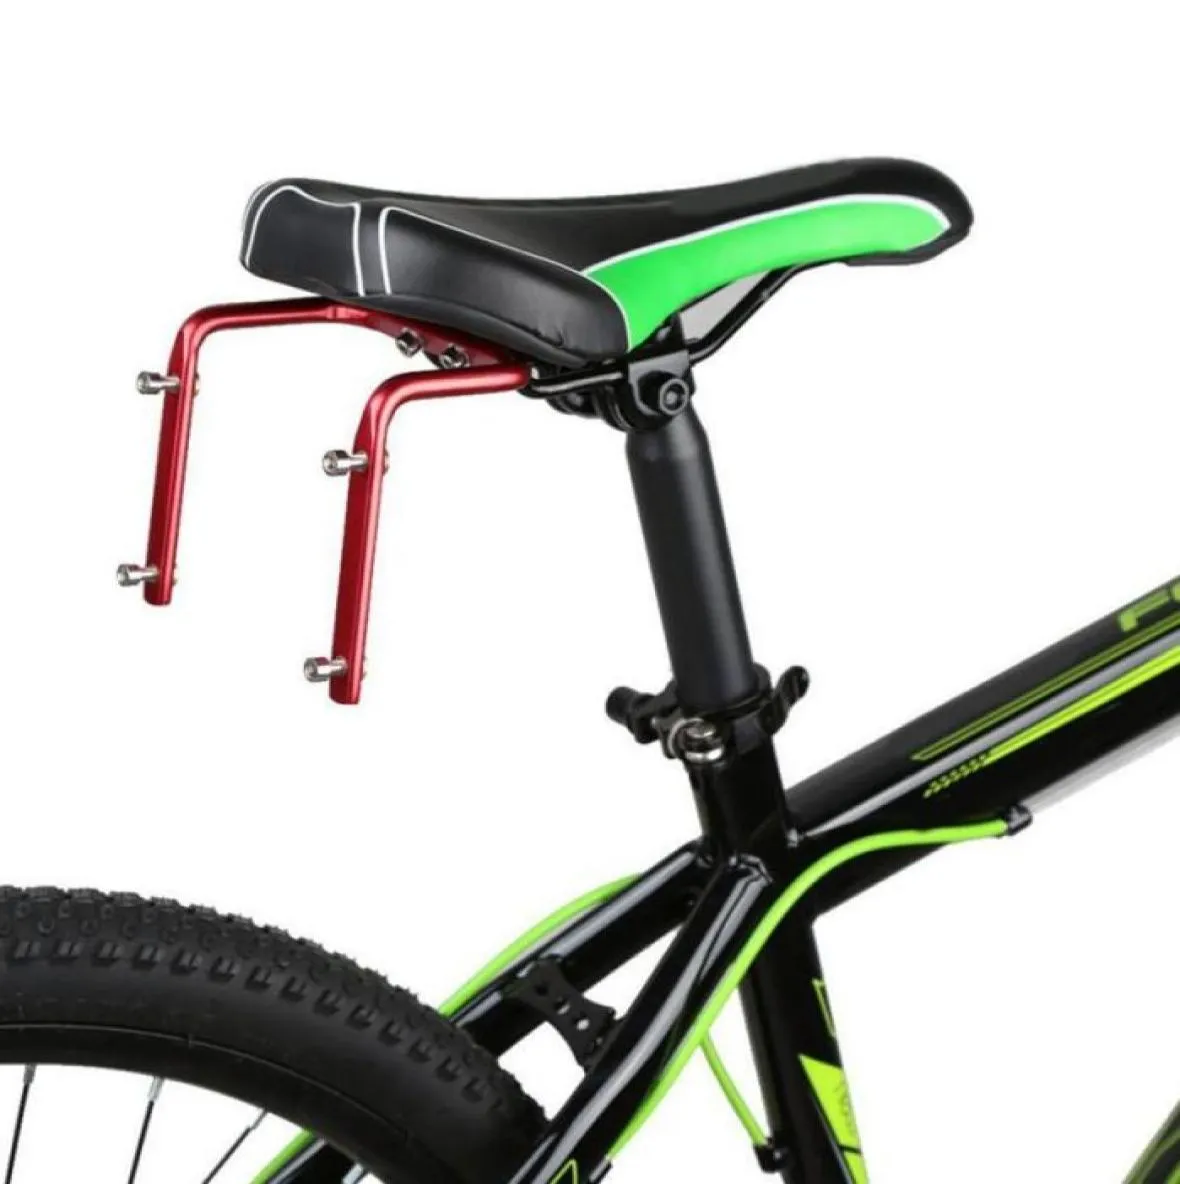 Cykel aluminium sadel dubbel flaskbur adapter mountainbike flaskburen omvandlare hållare ridutrustning tillbehör2559282